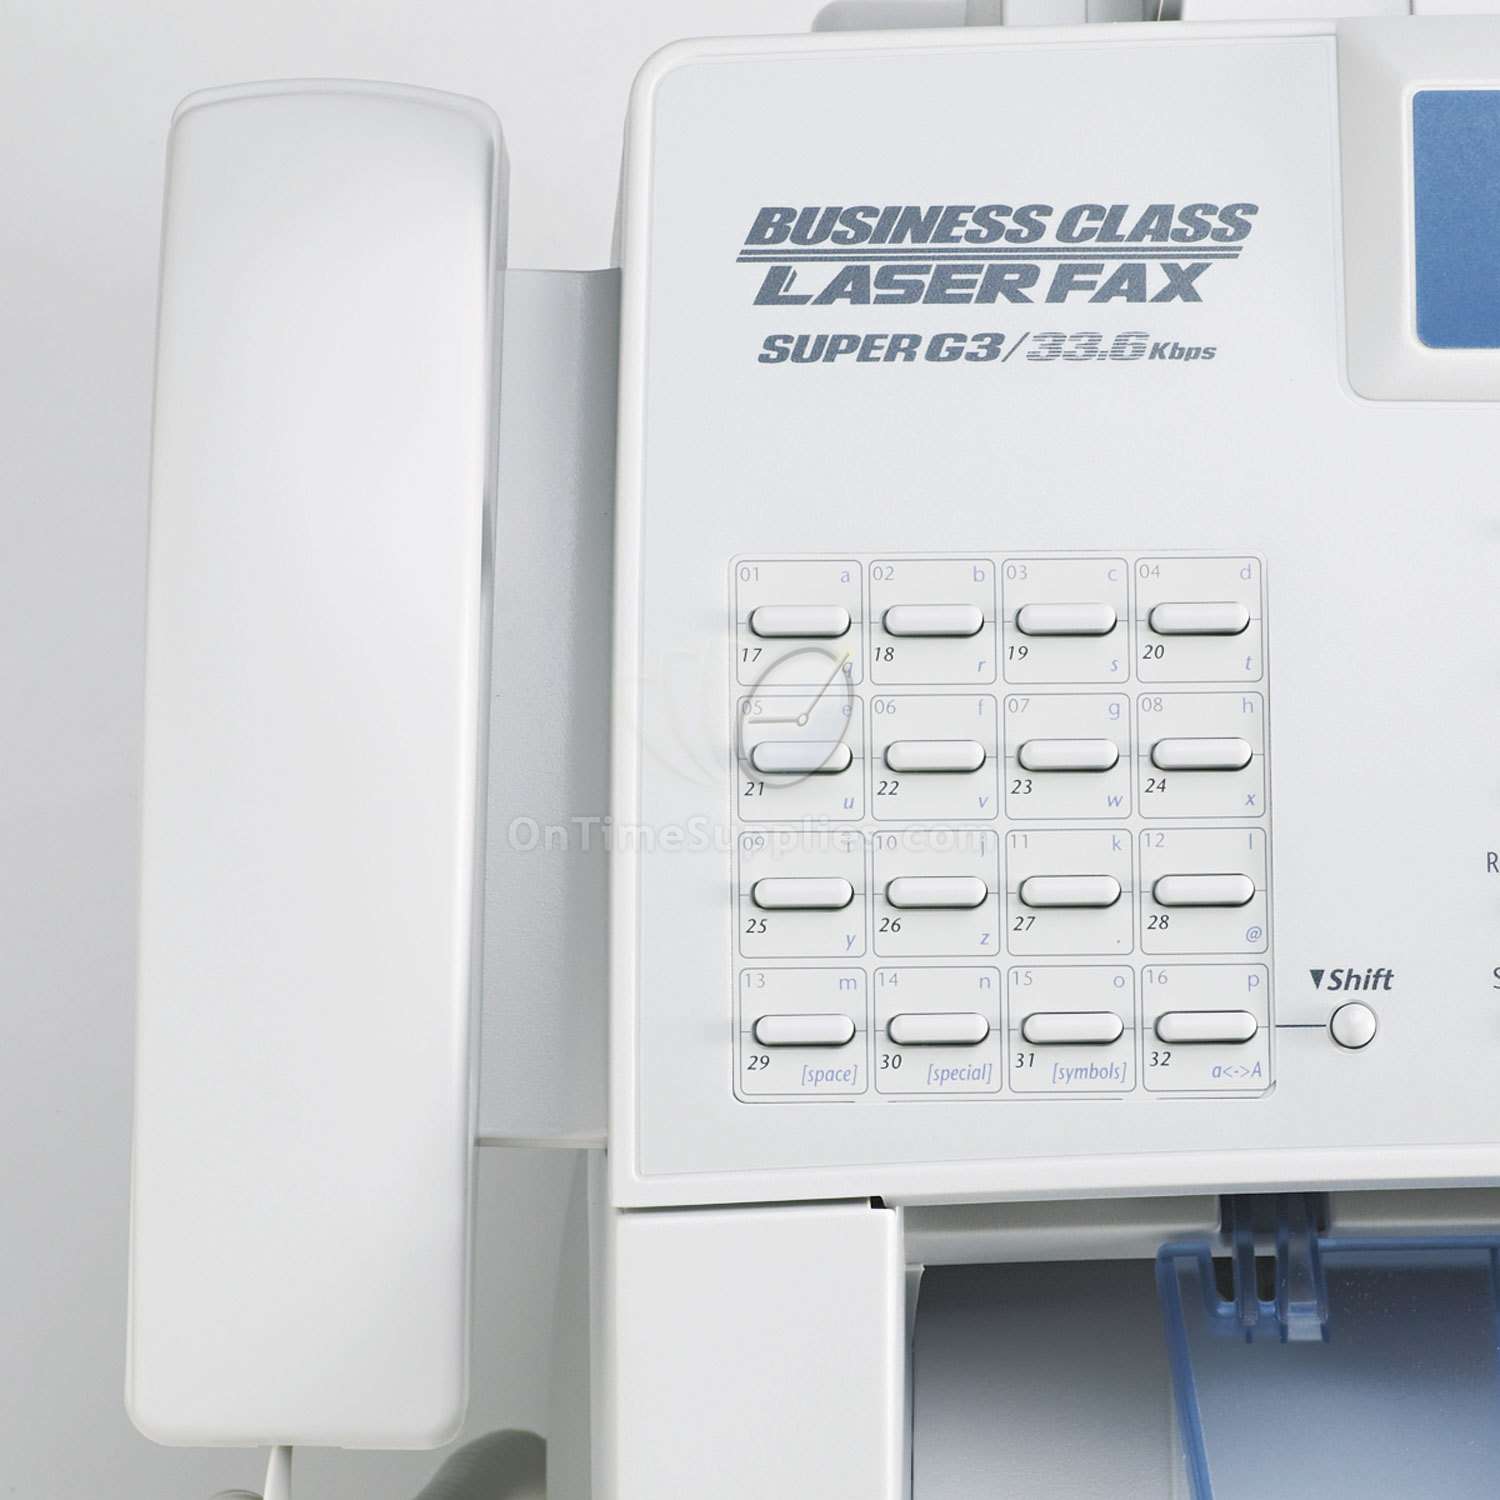 Brother Laser Fax Super G3 User Manual